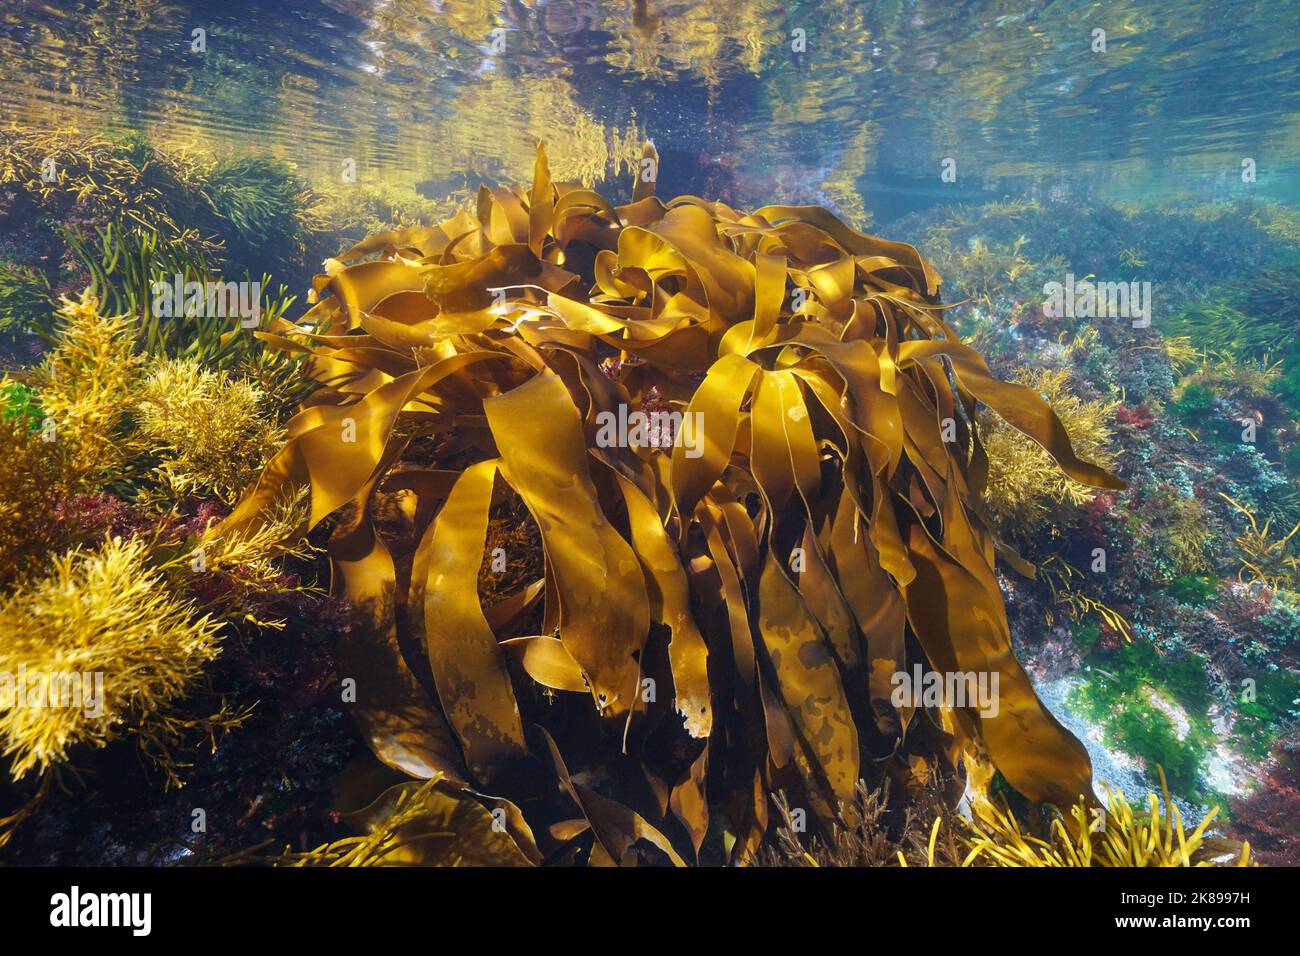 Algae in the ocean, golden kelp seaweed, Laminaria ochroleuca, underwater scene, Eastern Atlantic, Spain Stock Photo